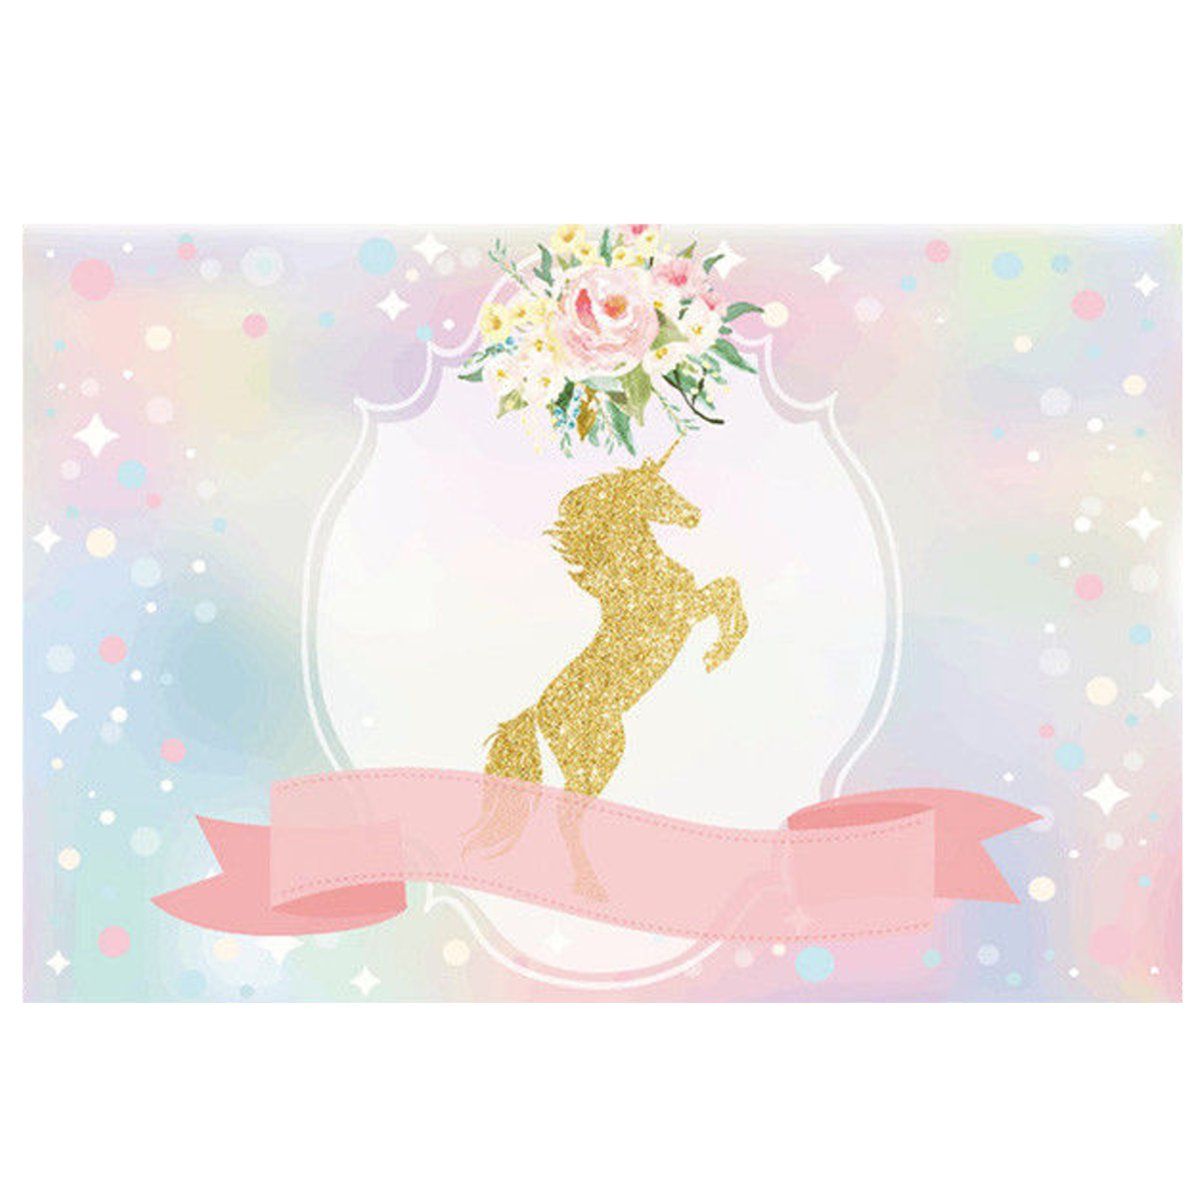 Unicorn-Ribbon-Flowers-Baby-Shower-Party-Photo-Backgrounds-Backdrop-Studio-Prop-1239423